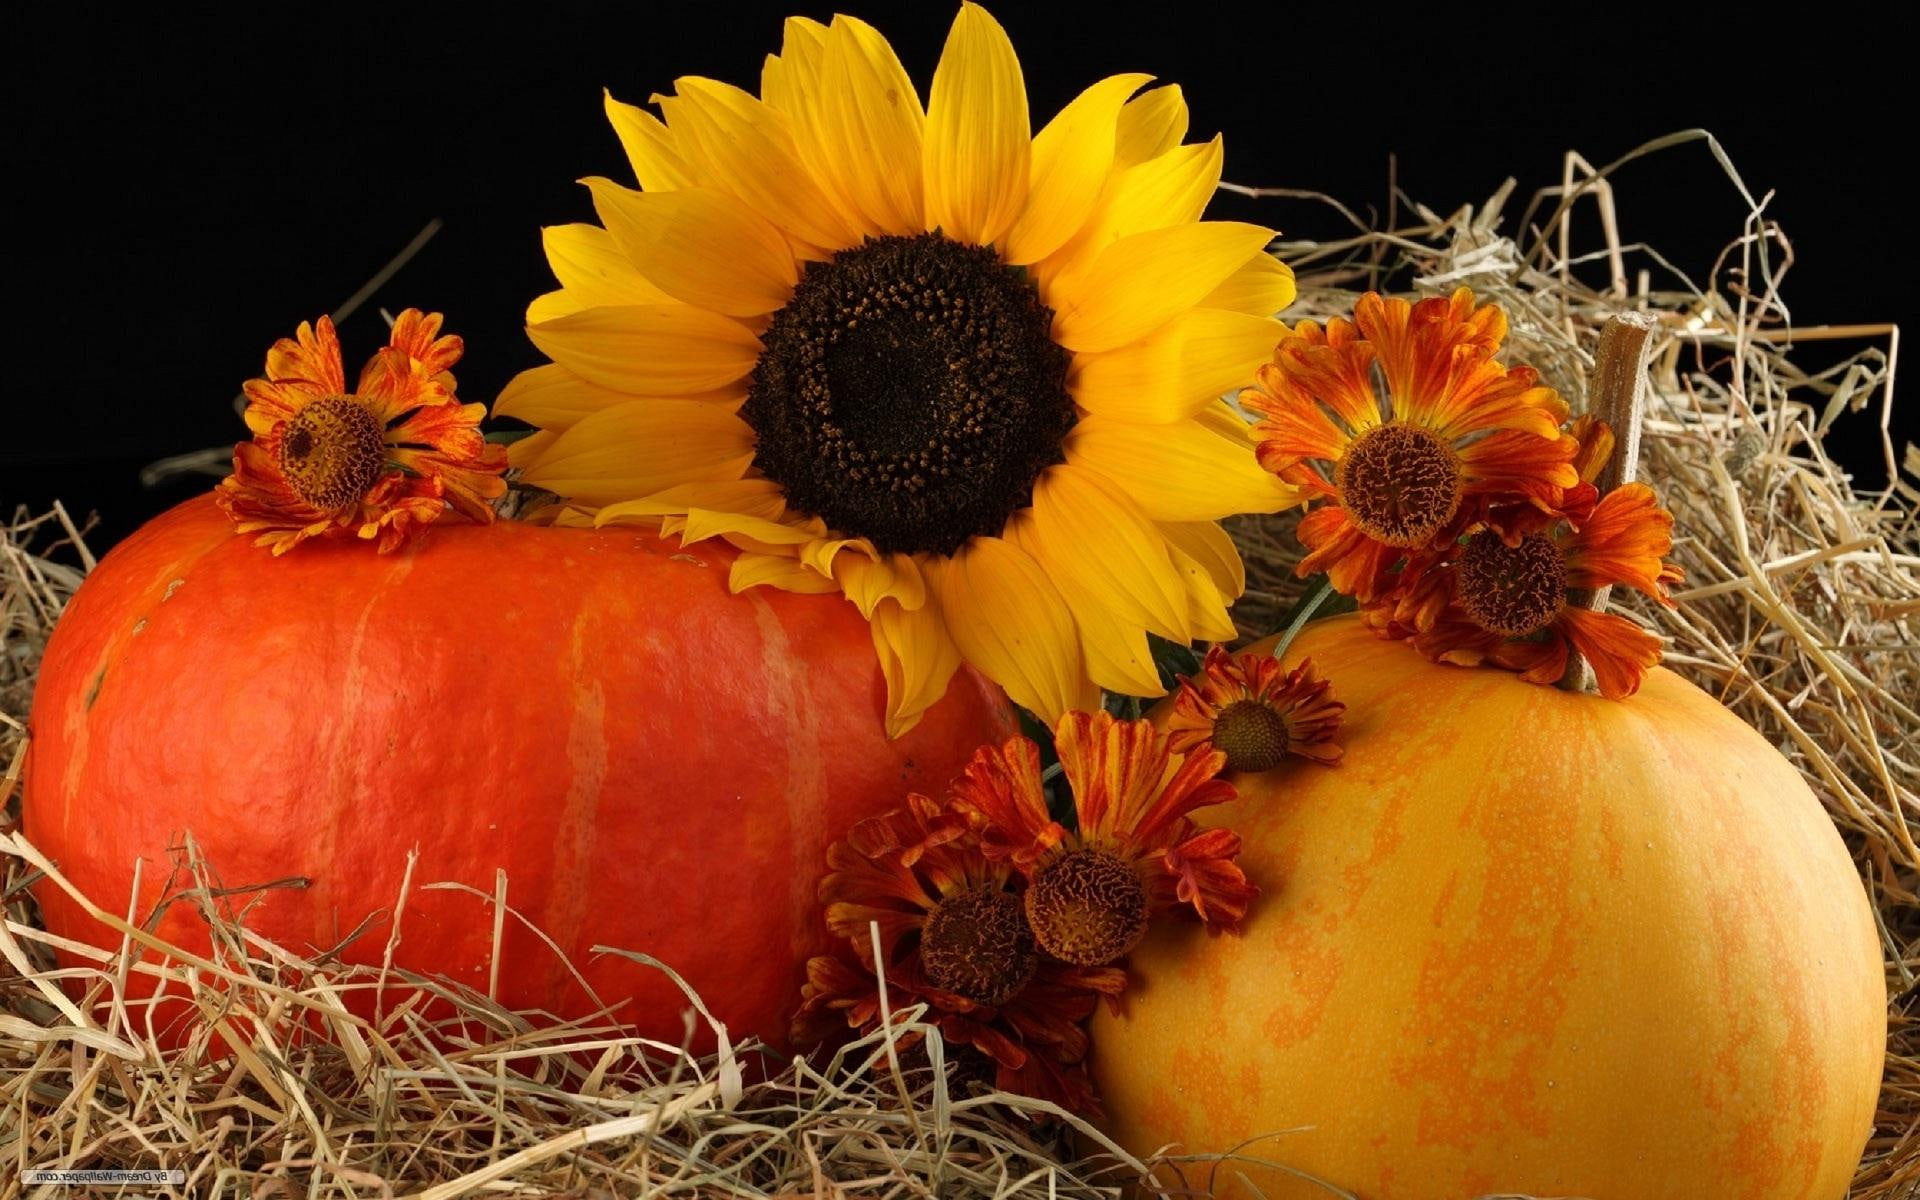 Harvest Autumn, thanksgiving, halloween, flowers, pumpkin, sunflower